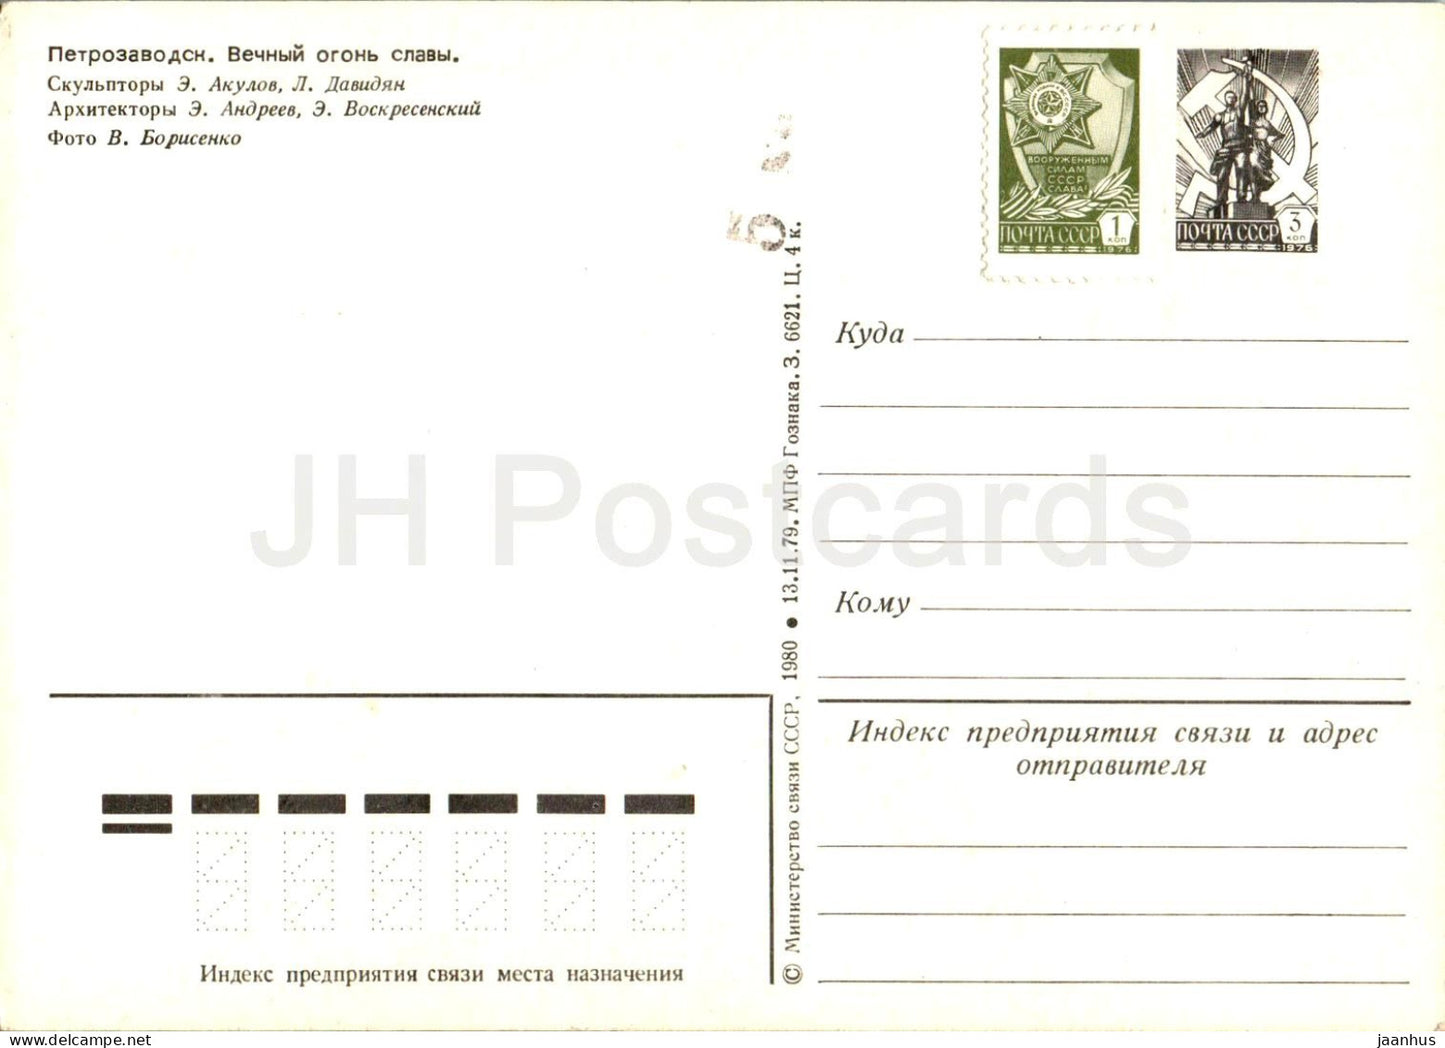 Petrozavodsk - Eternal flame of glory - postal stationery - 1 - 1980 - Russia USSR - unused